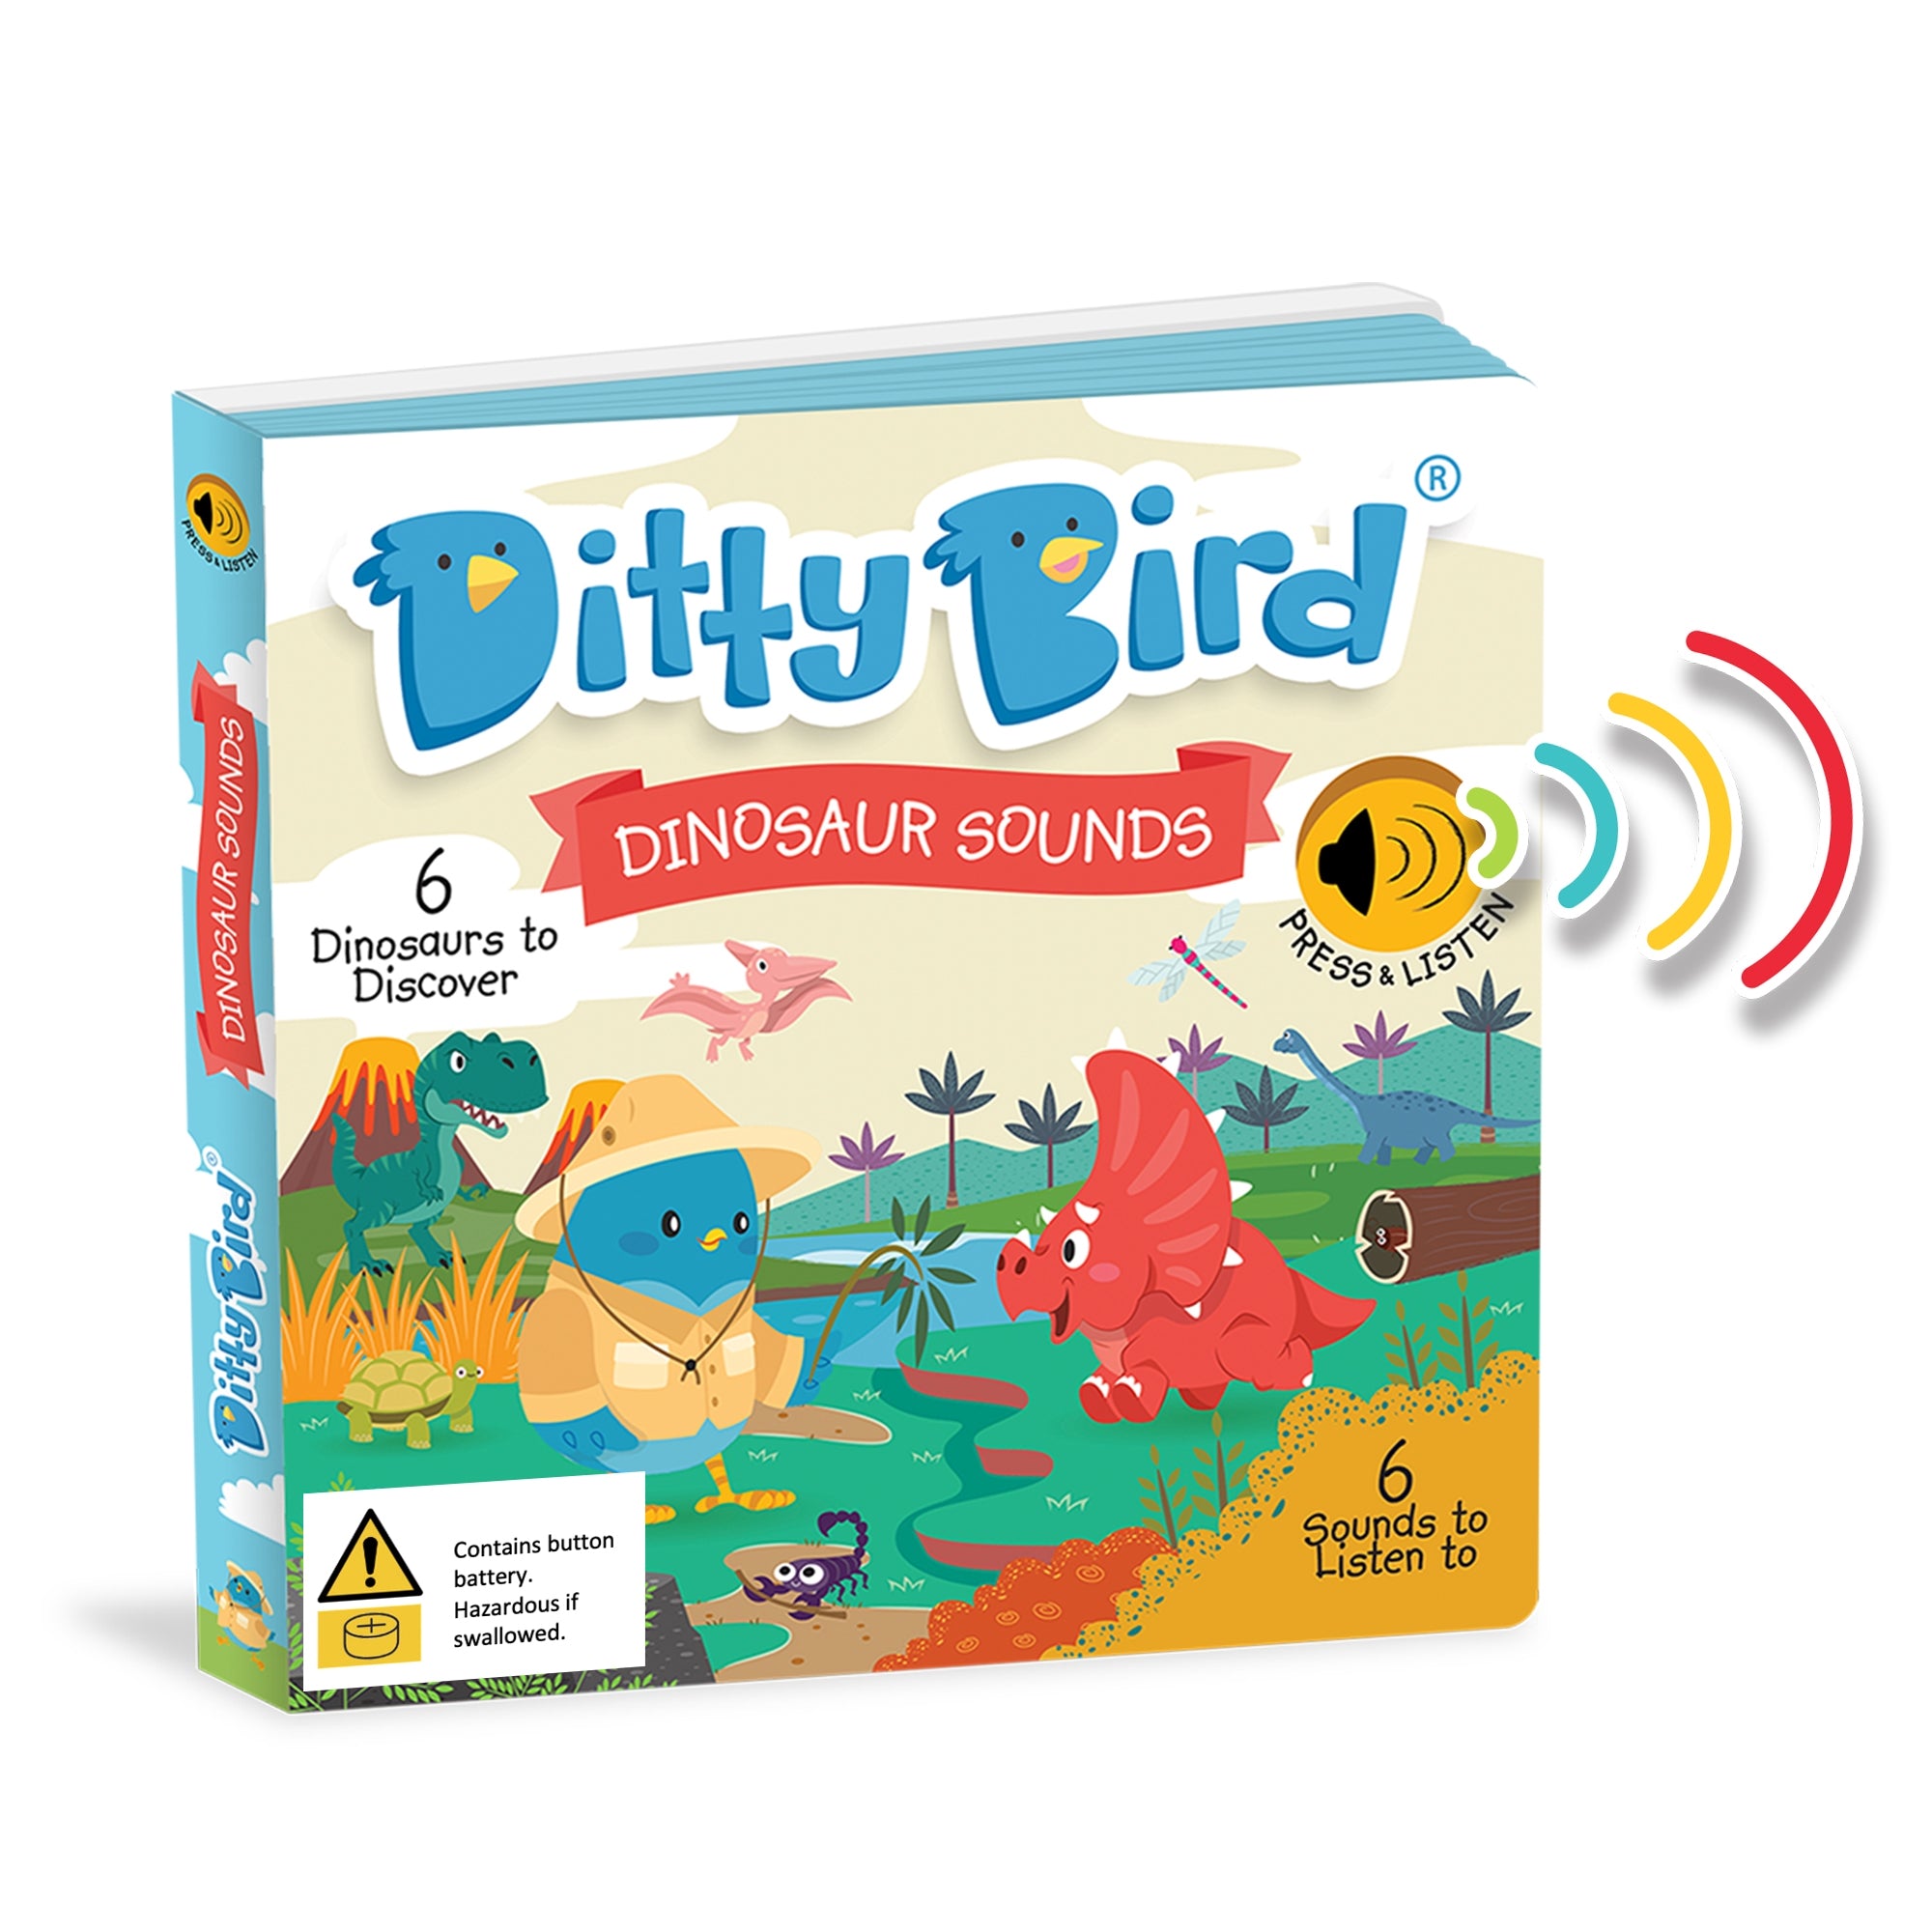 Dinosaur Sounds - Ditty Bird